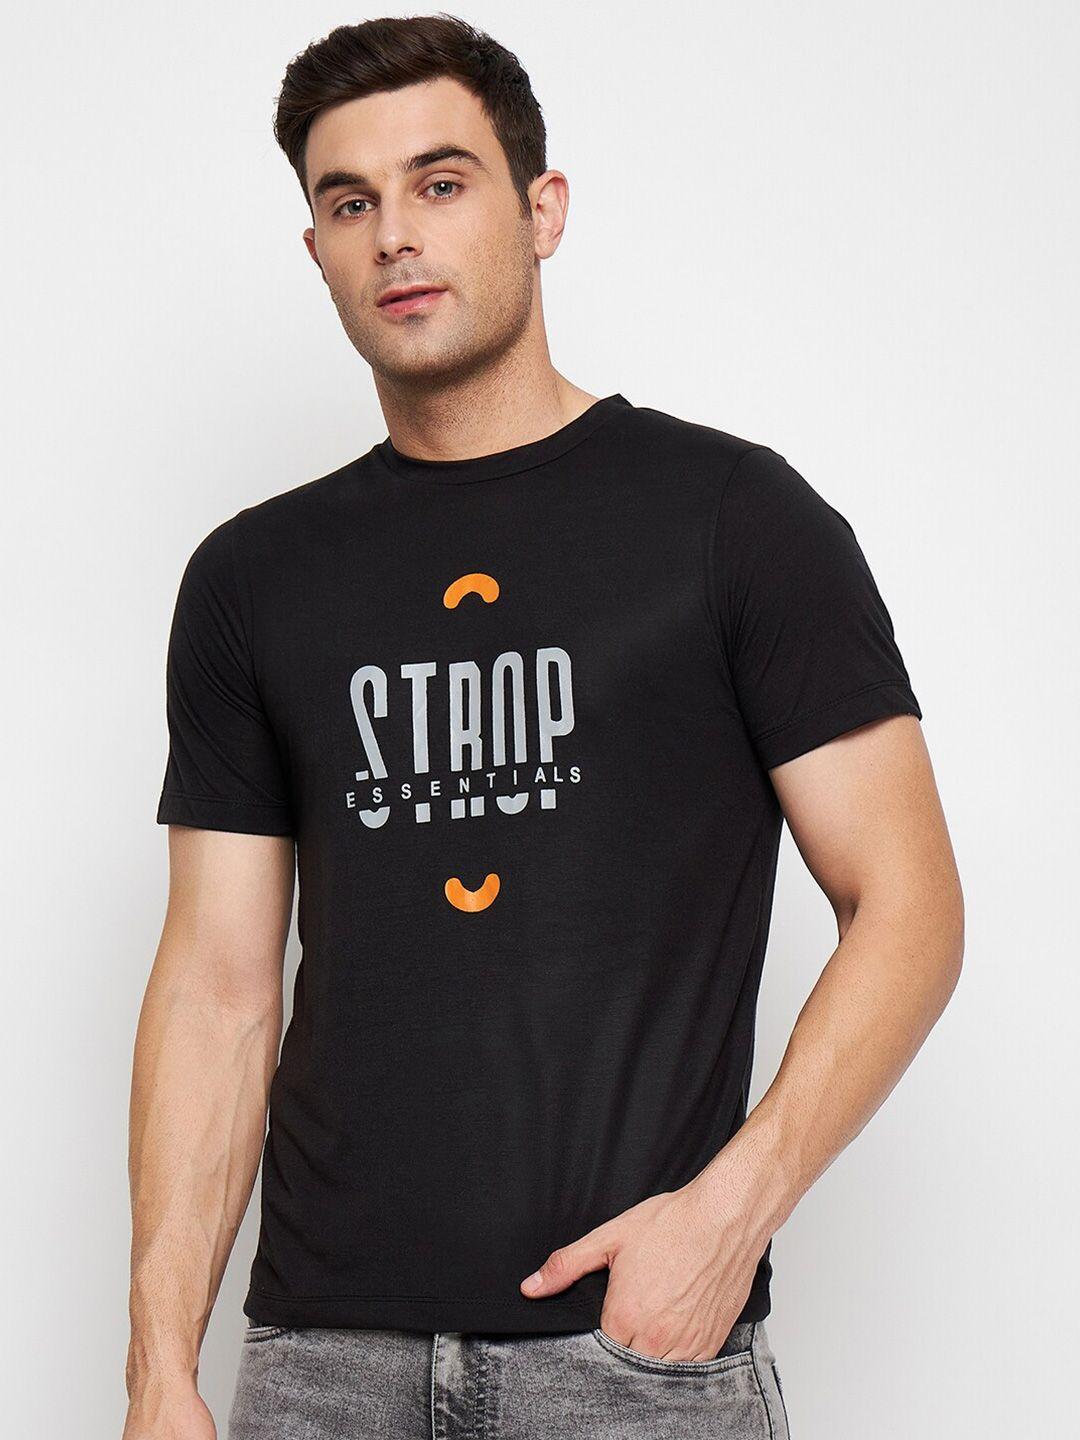 strop typography printed pure cotton regular t-shirt